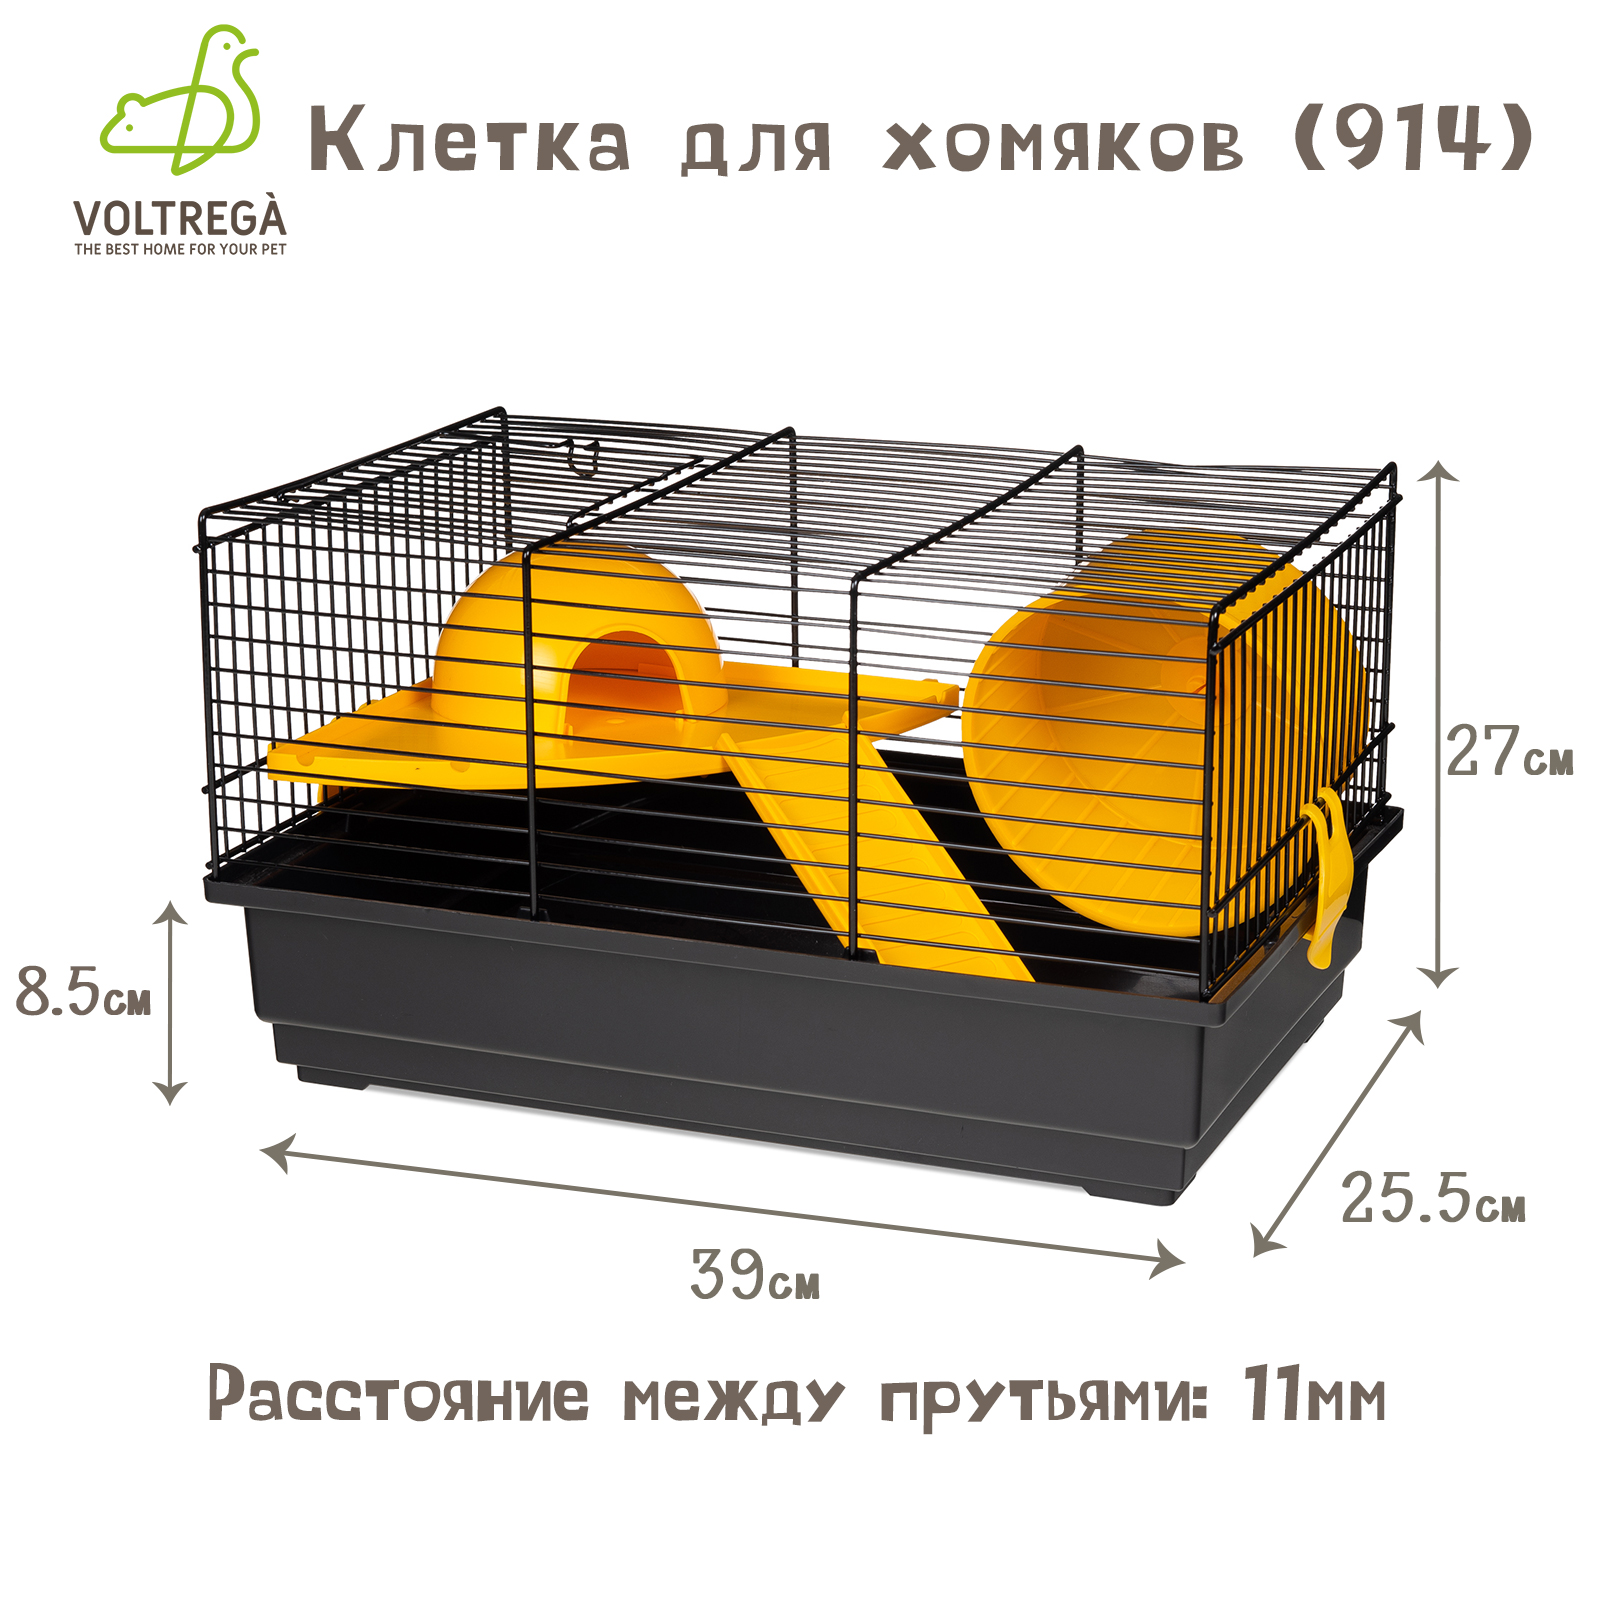 Клетка для грызунов Voltrega 914, чёрно-желтый, 39х25.5х22см